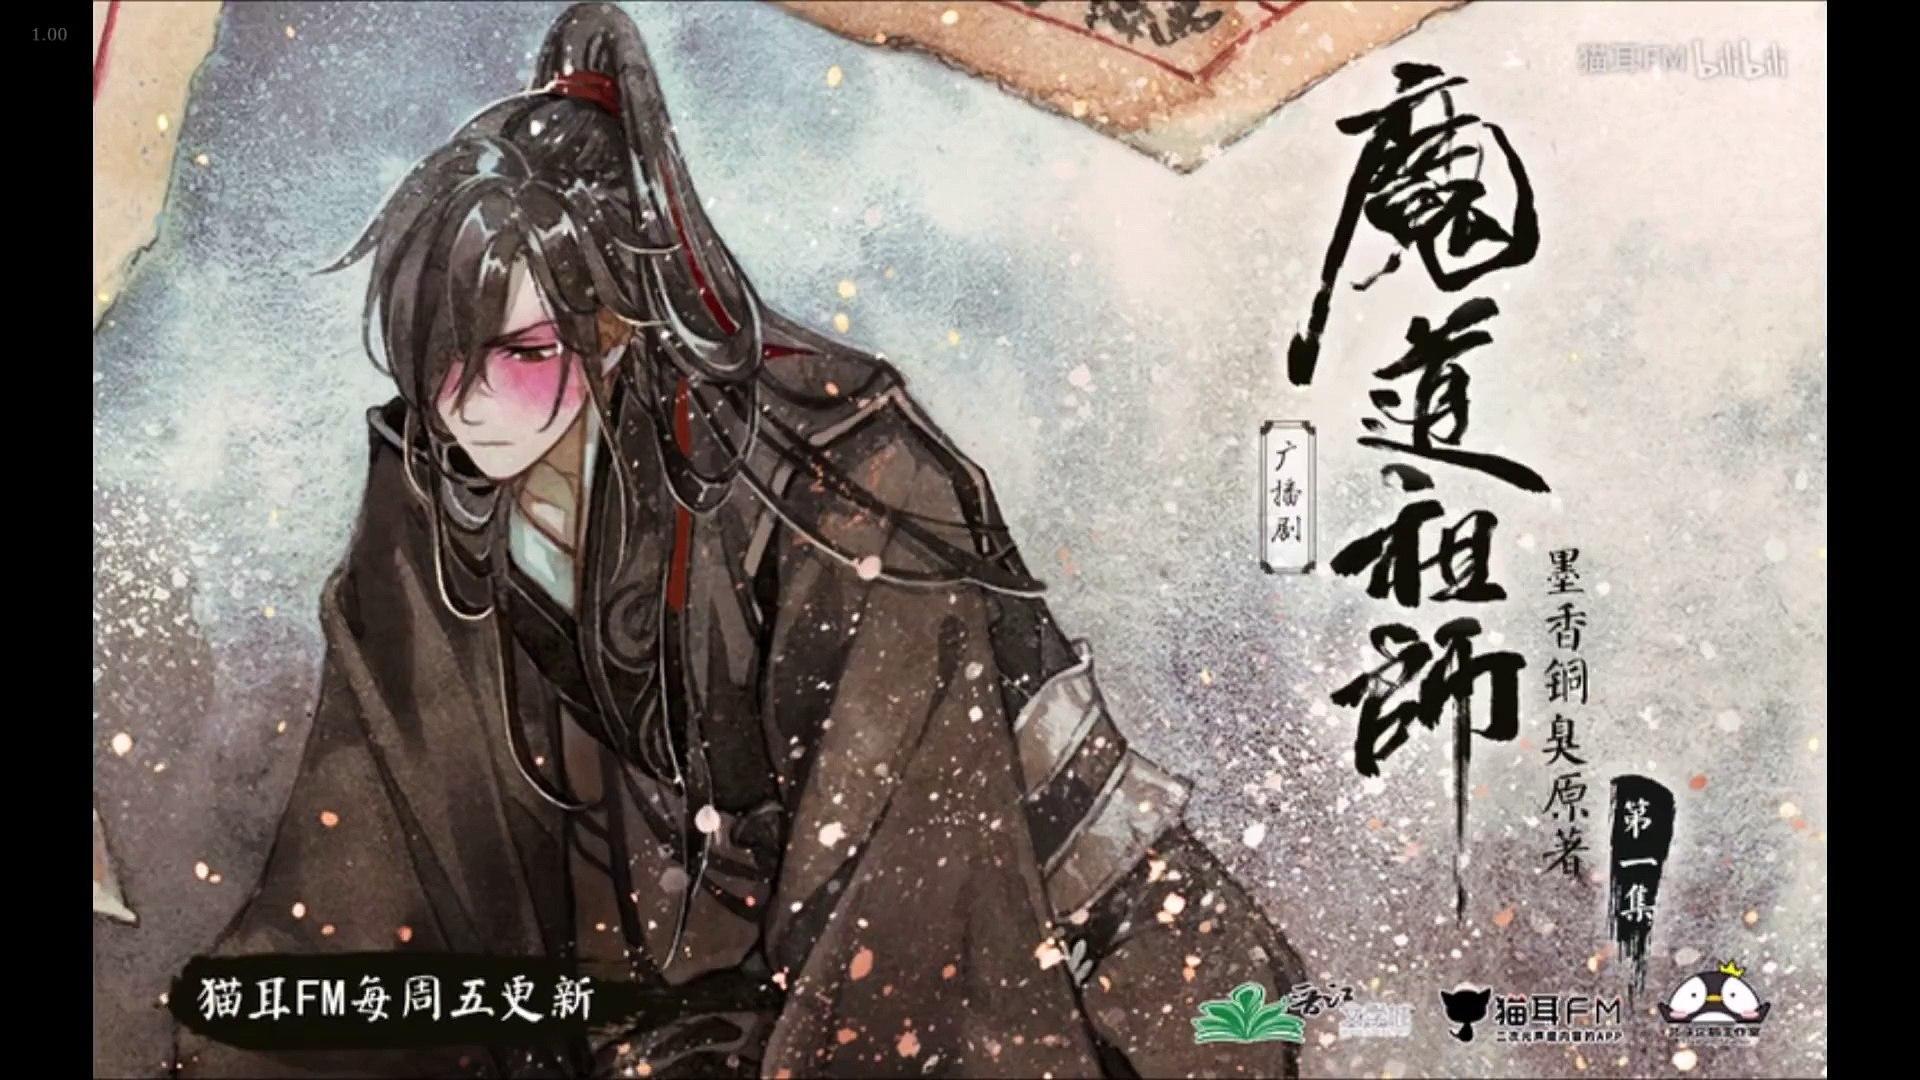 Mo Dao Zu Shi New Wallpaper, Mo Dao Zu Shi, Anime